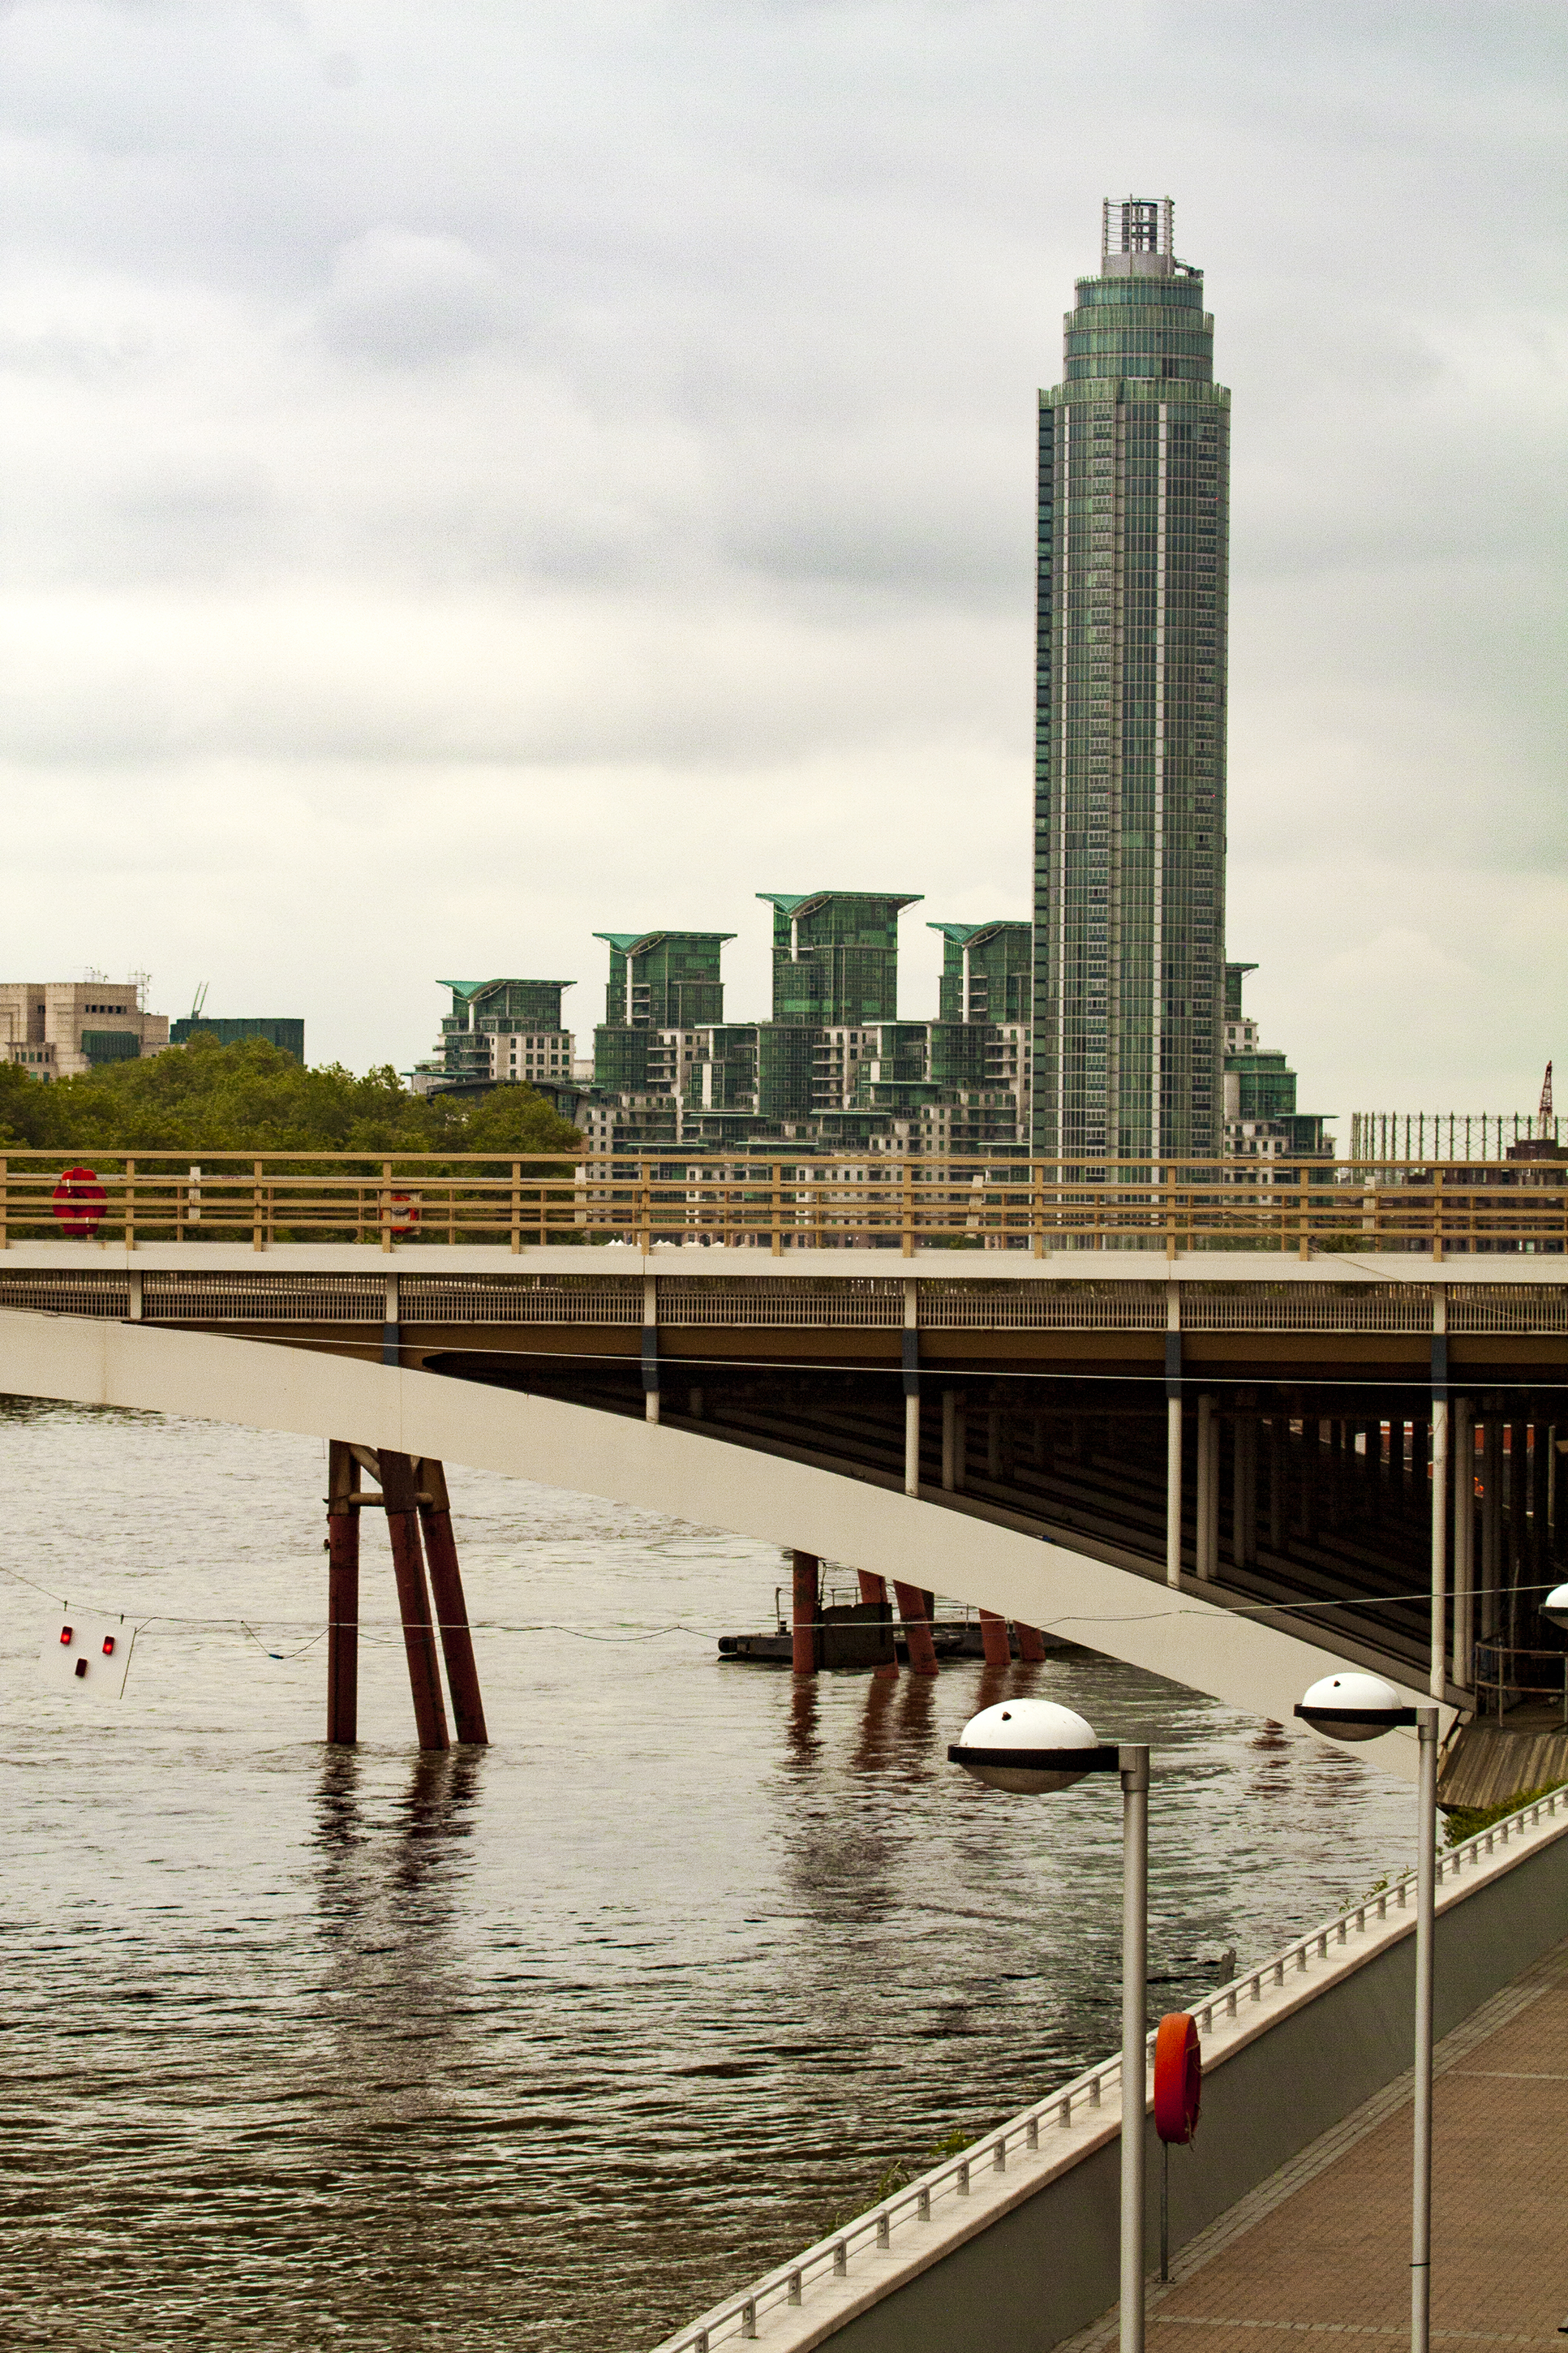 El Río Río Thames, Londres, UK